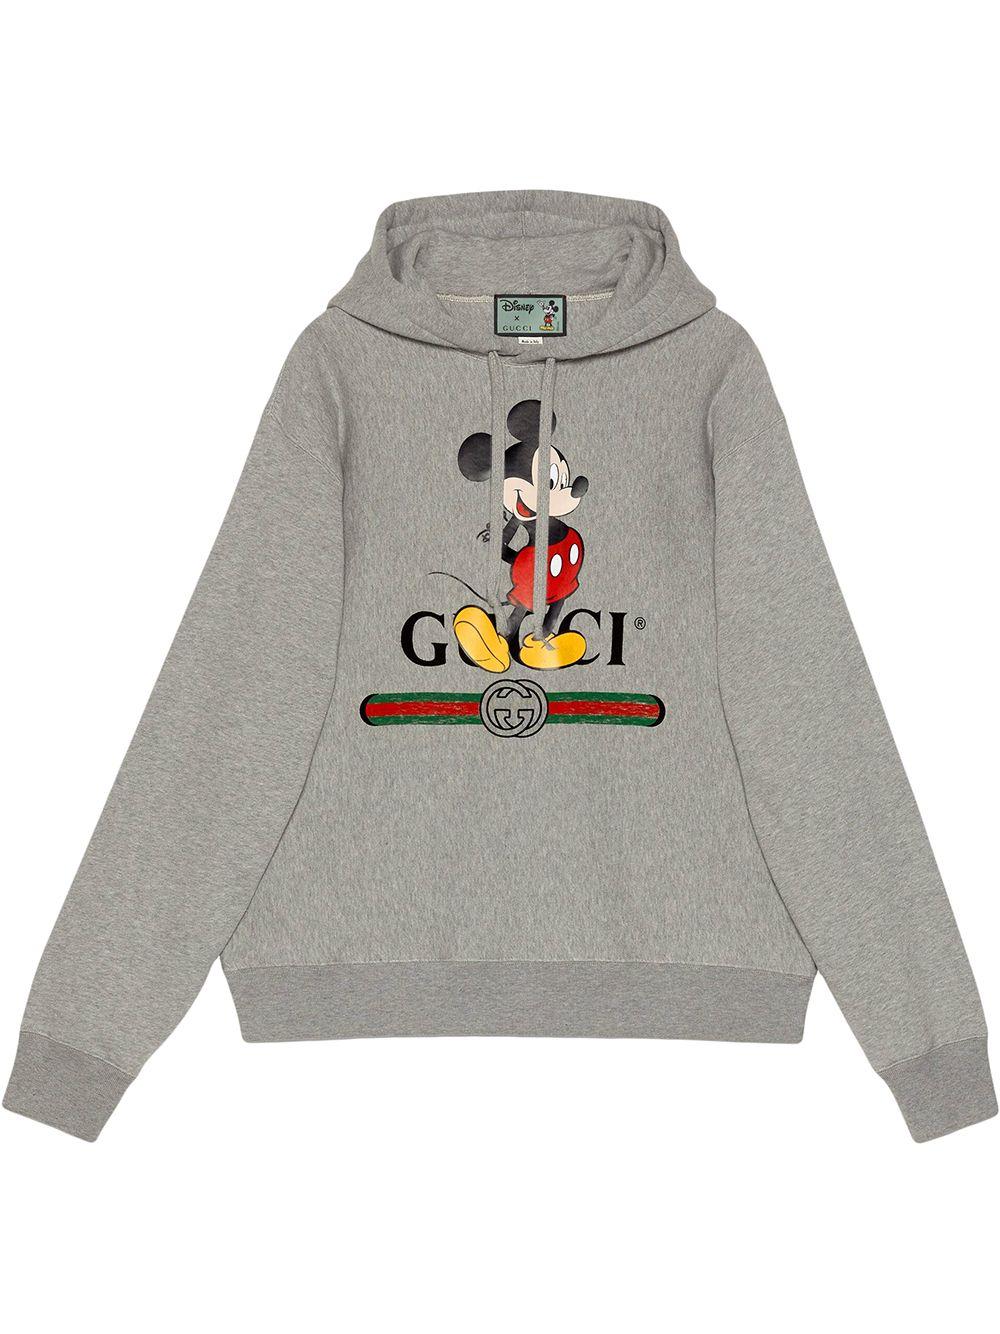 Gucci Disney X Hooded Sweatshirt in Gray for Men | Lyst